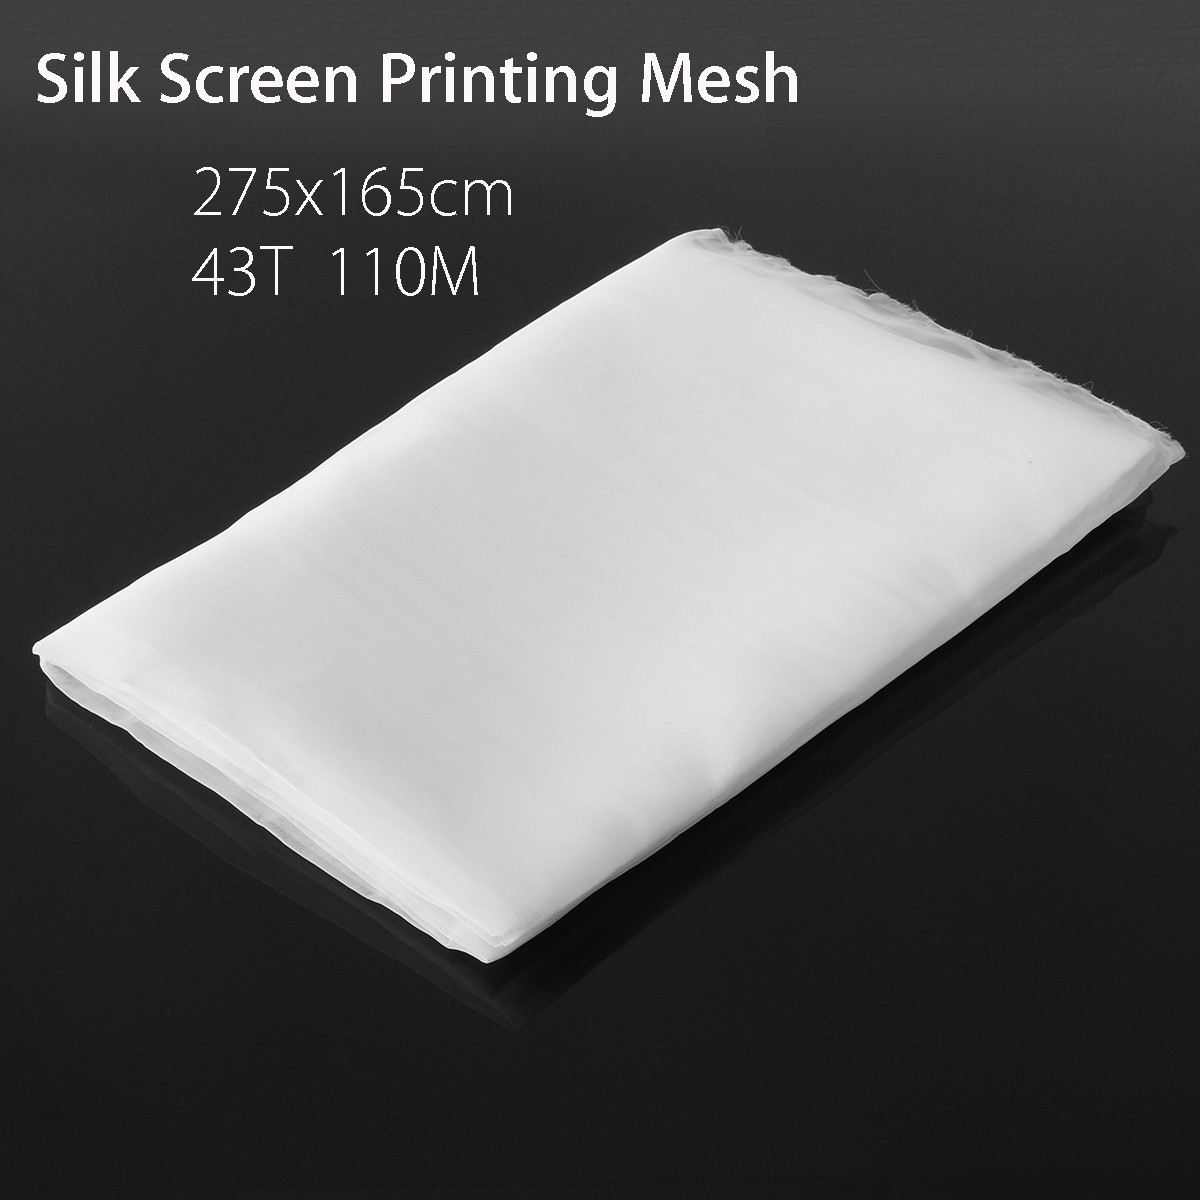 43T 110M White Polyester Silk Screen Printing Mesh Fabric Textile 275x165cm 1